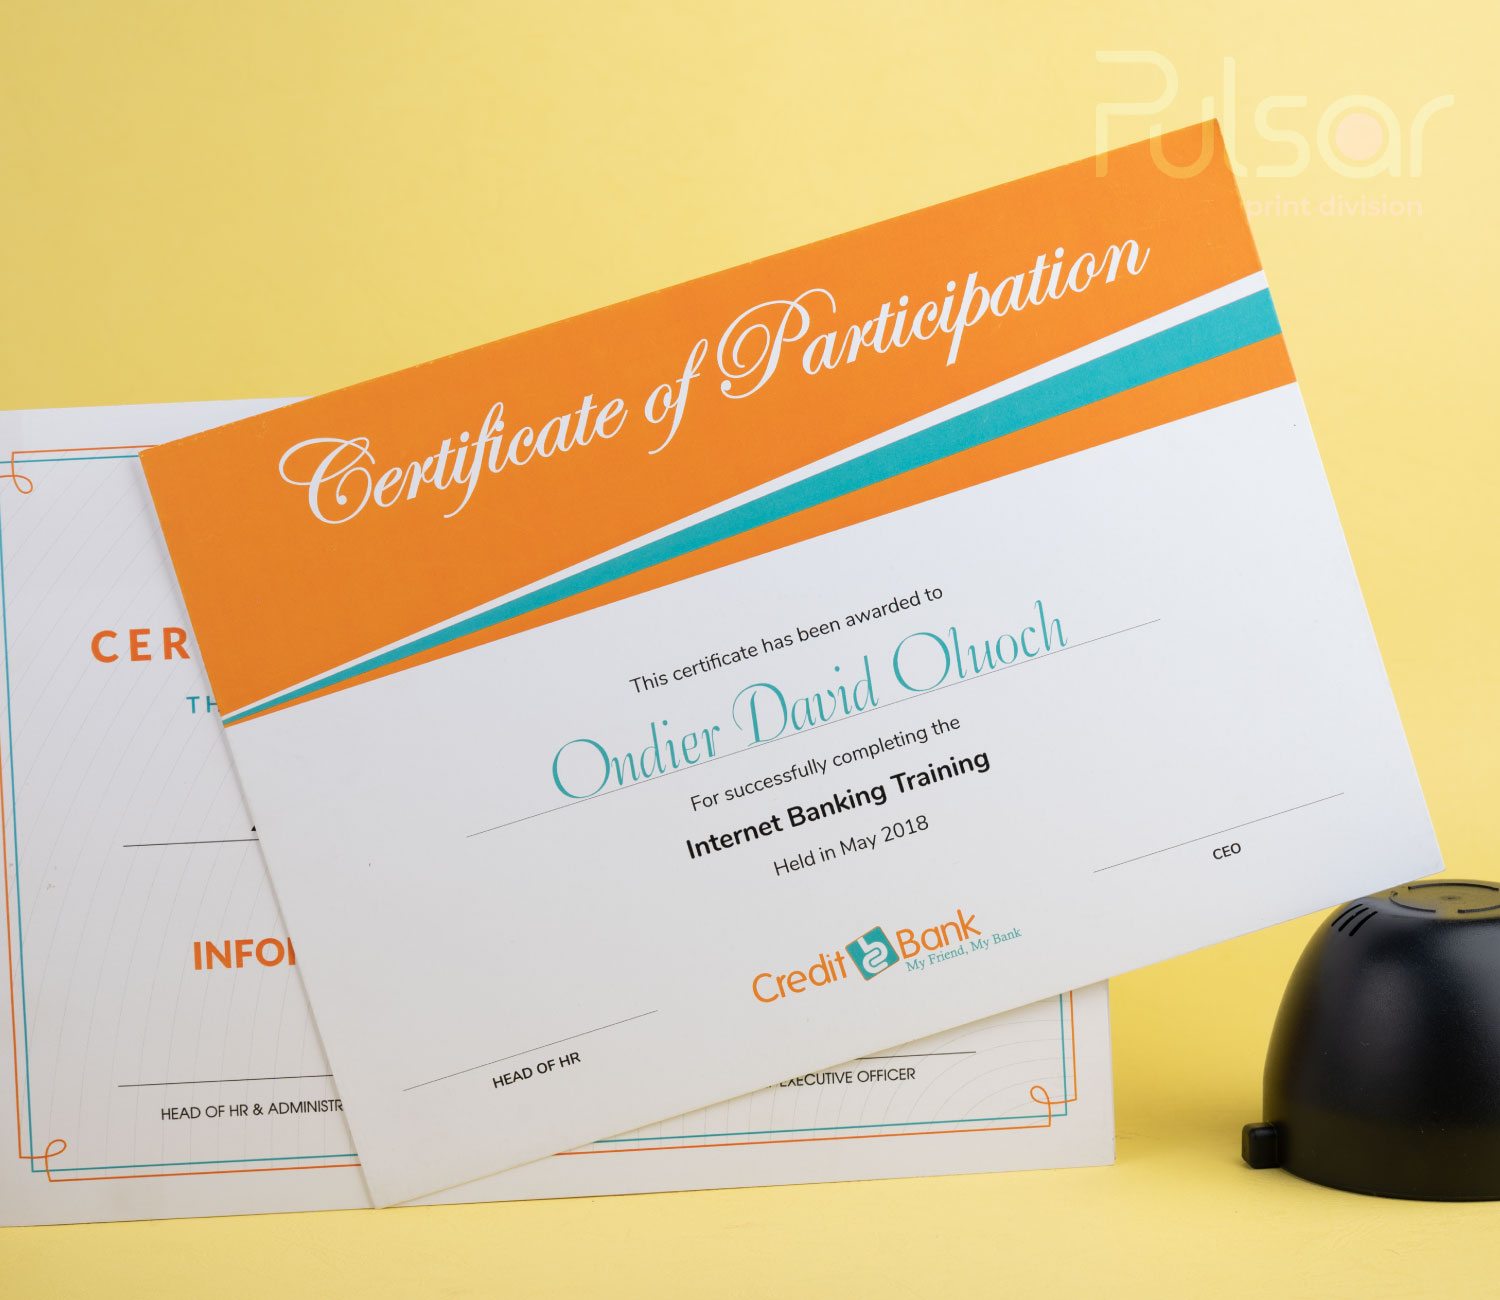 Creative Professional Certificate Graphic Design and Printing for Companies sand Individuals, Nairobi, Kenya